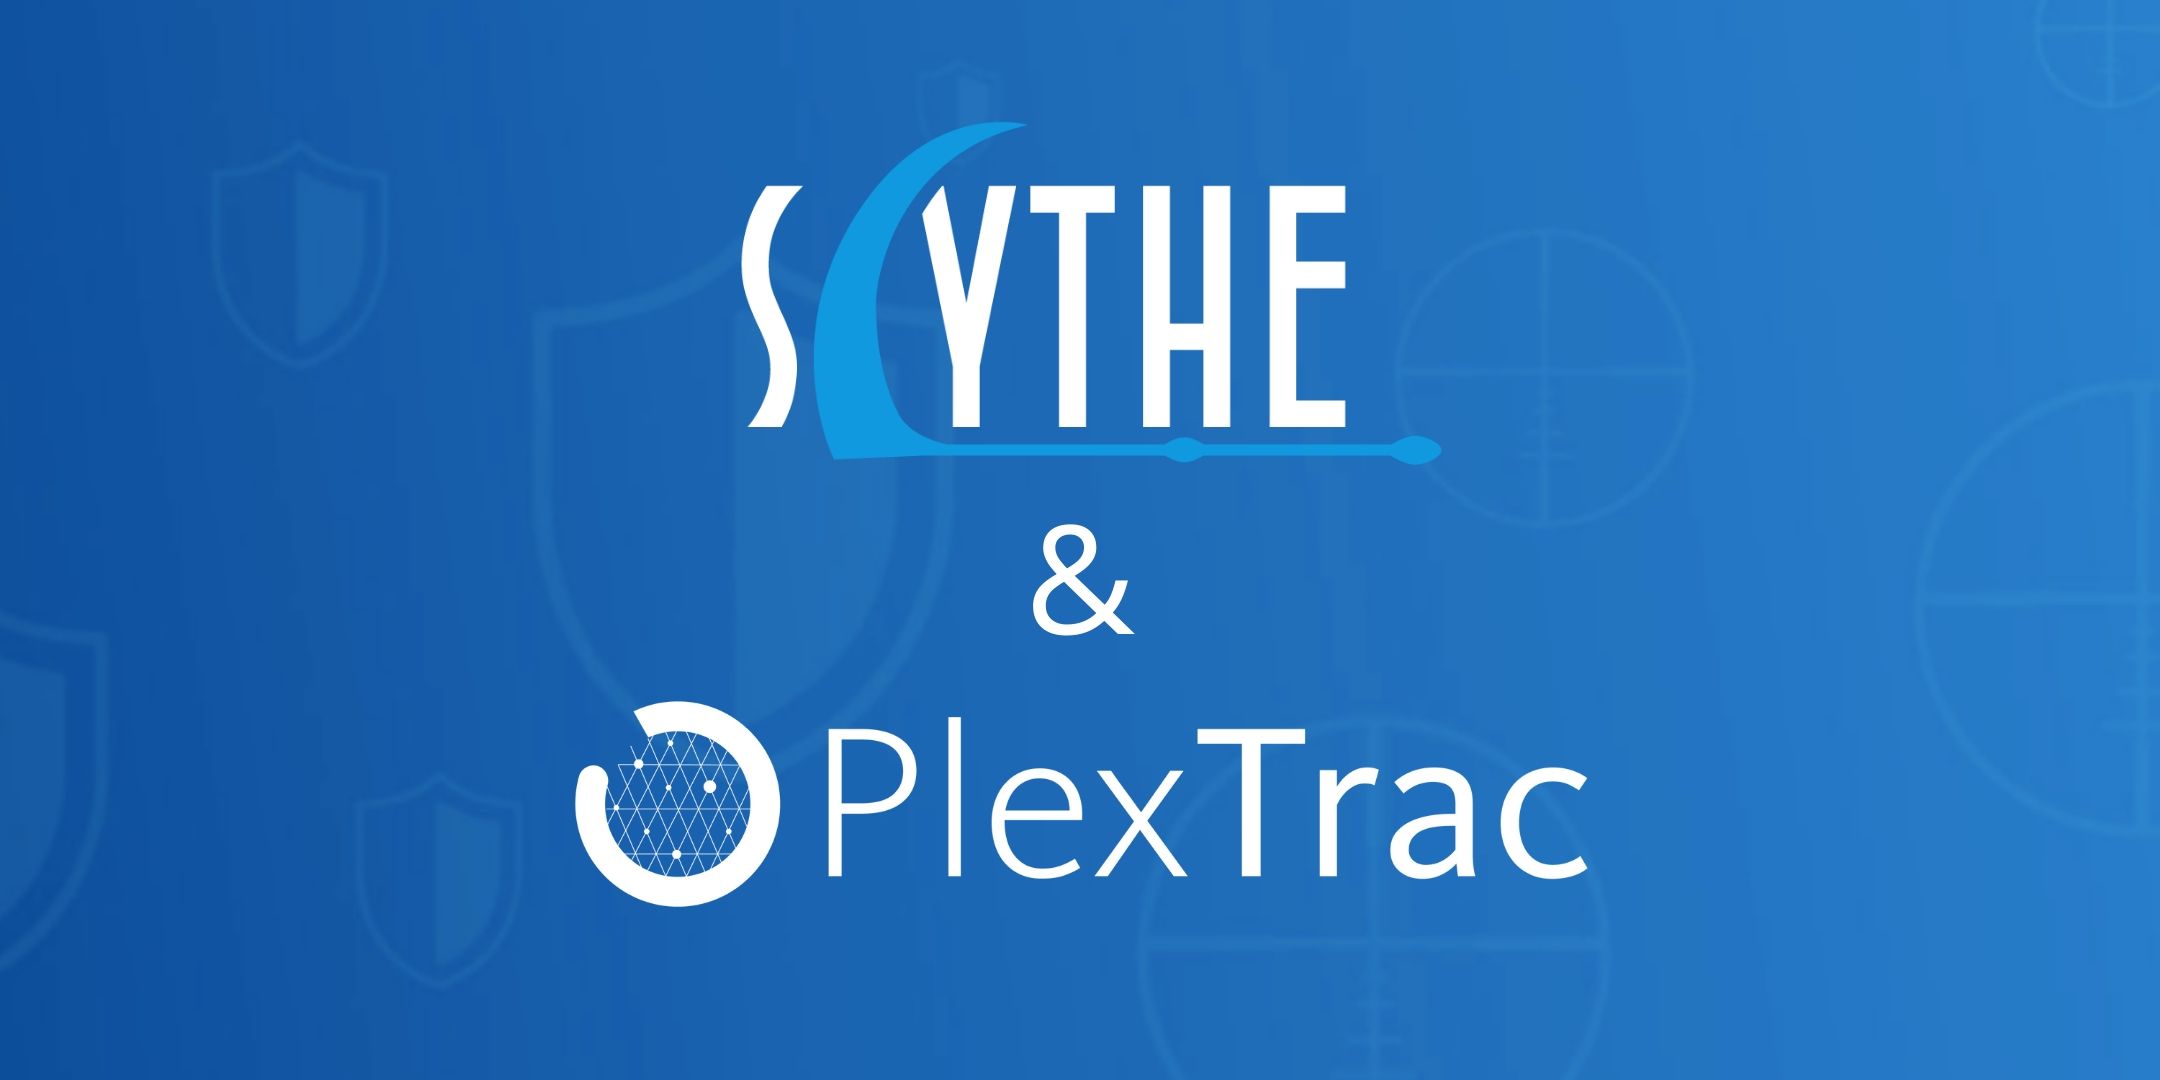 SCYTHE and PlexTrac Team Up to Streamline Security Data